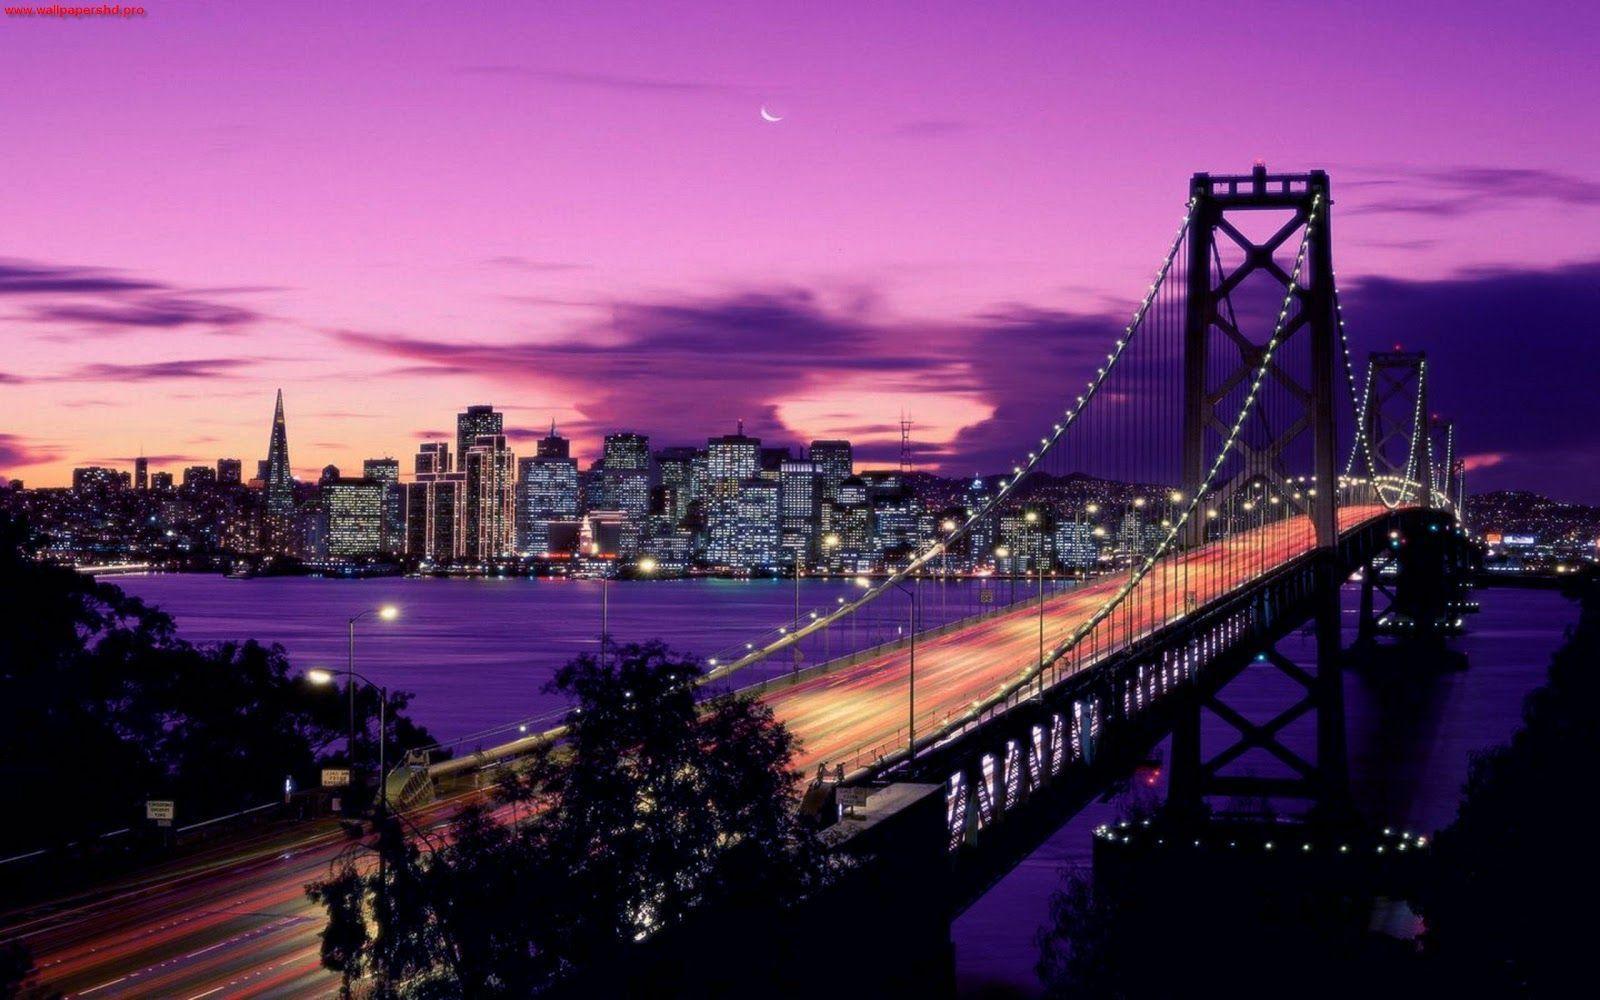 San Francisco Wallpaper. San Francisco Wallpaper, Urban San Francisco Wallpaper and San Francisco Thomas Kinkade Wallpaper